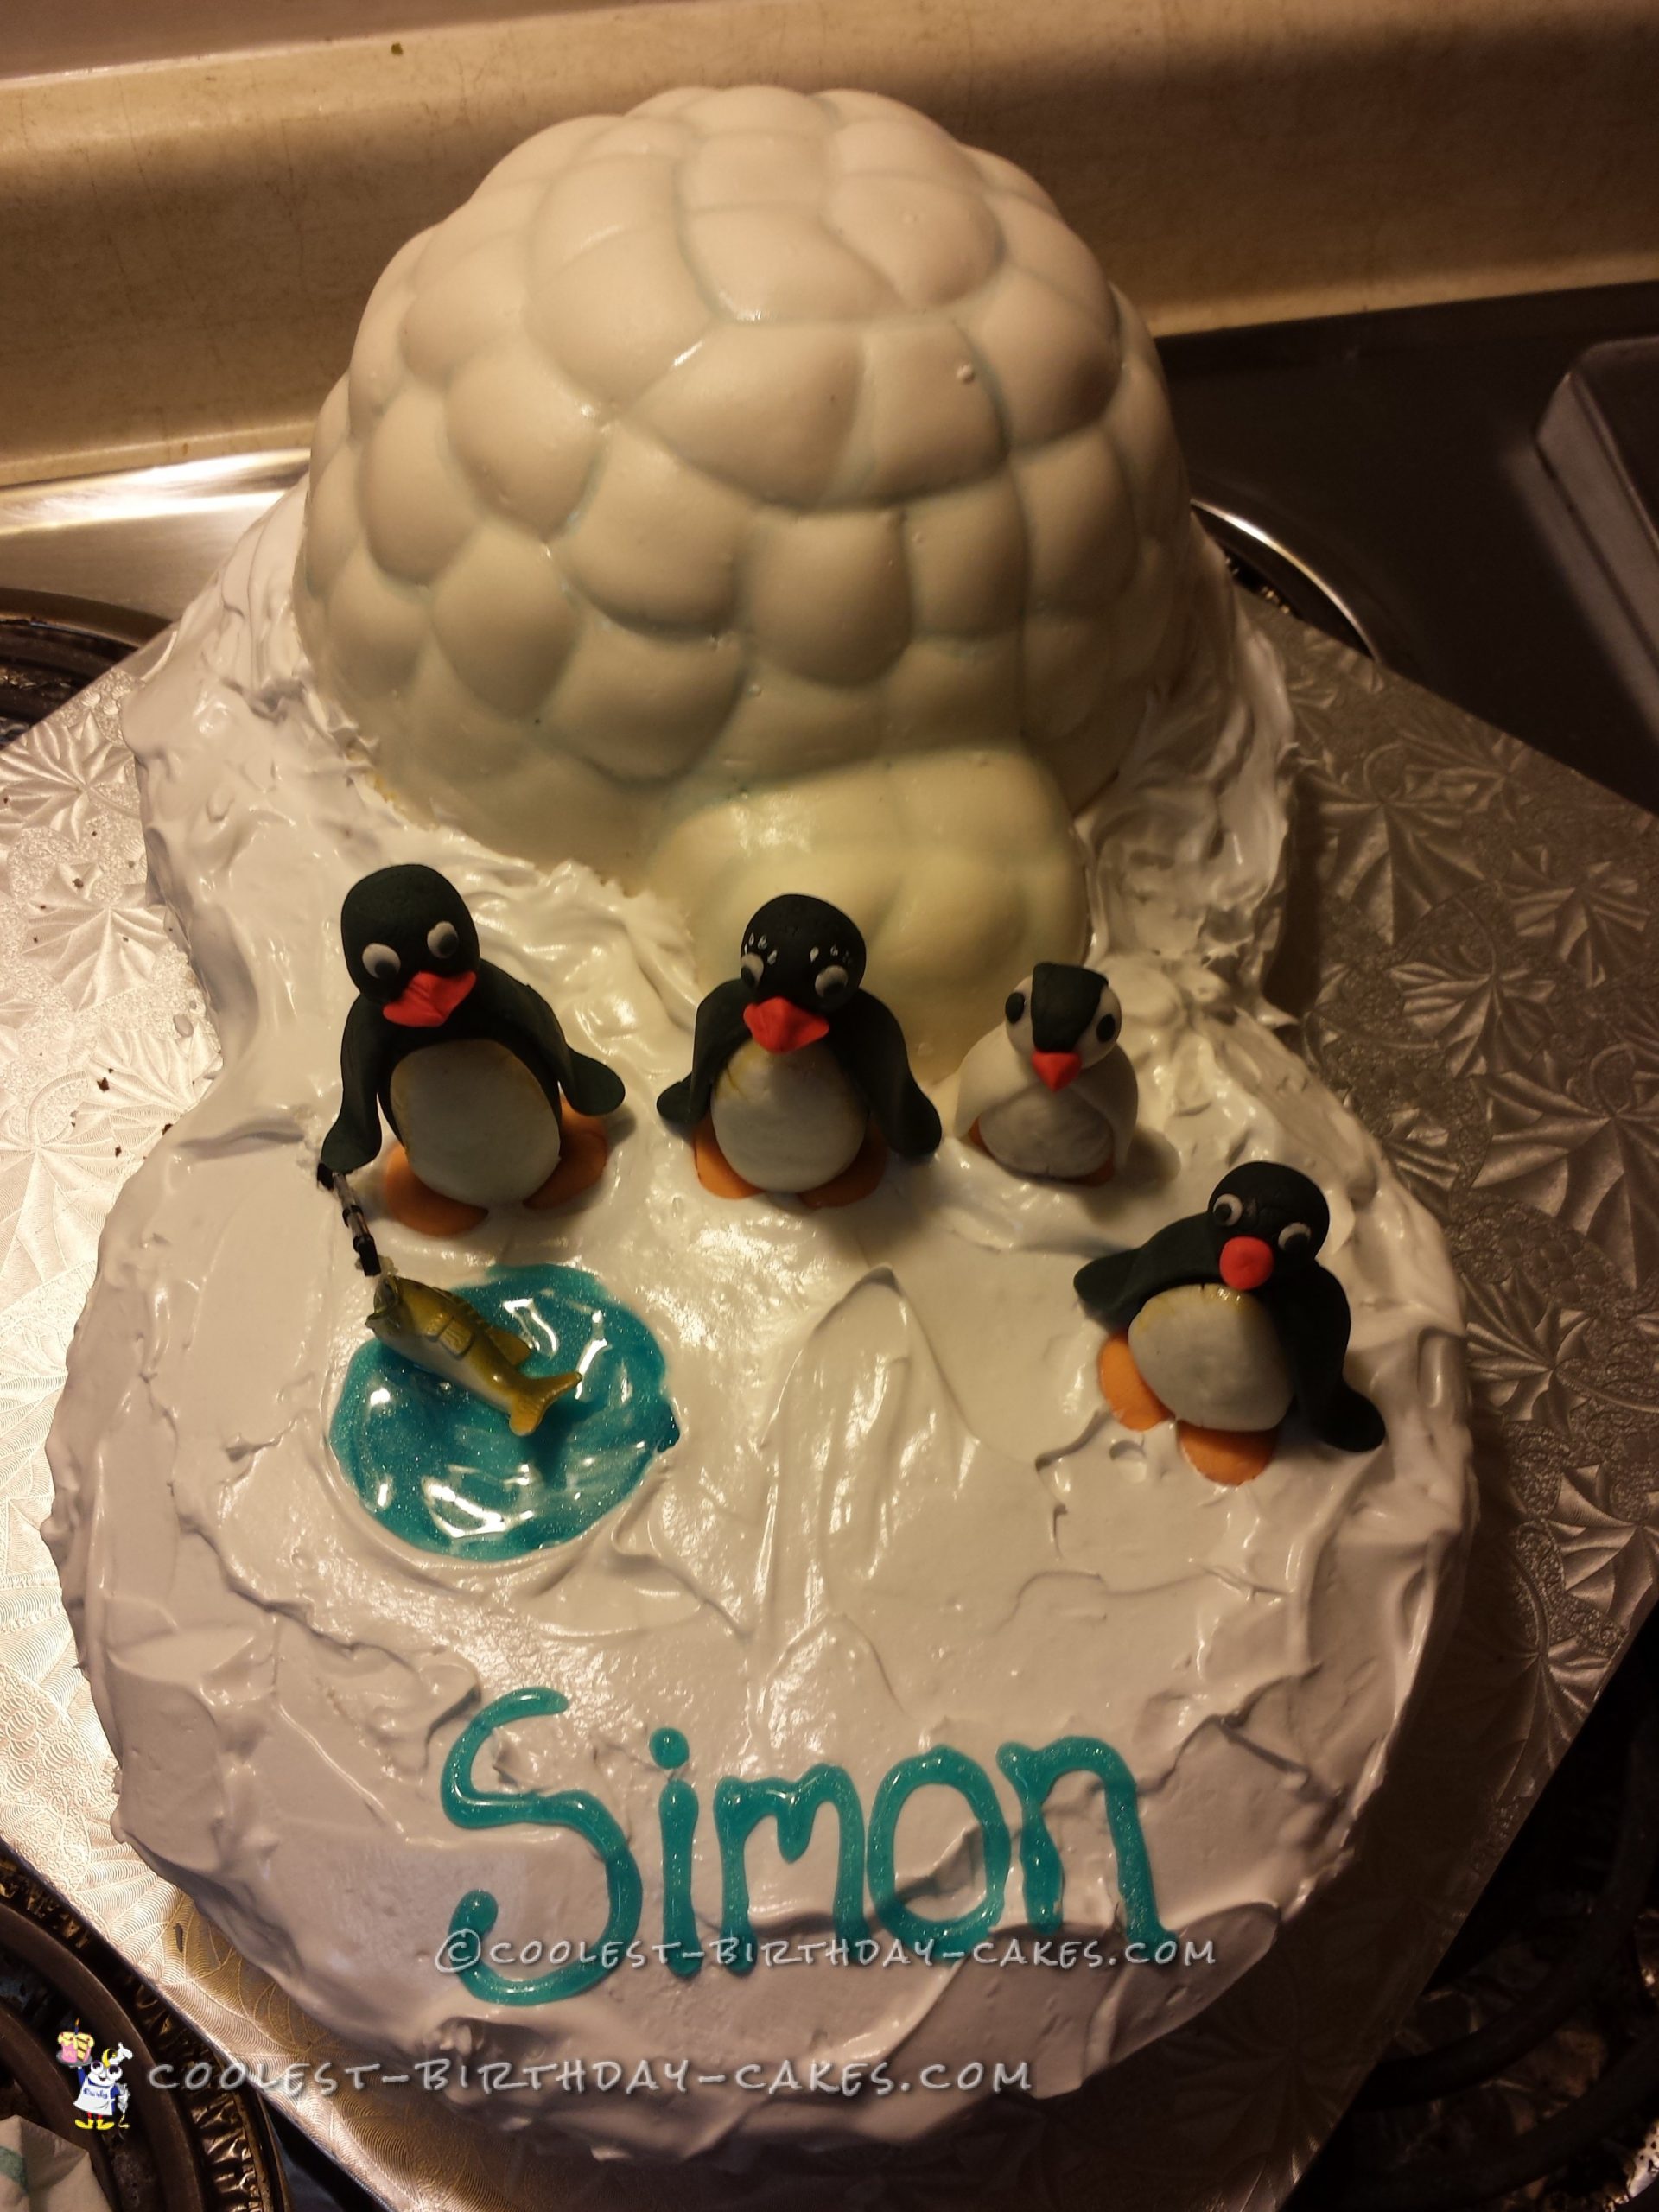 Very Cool Pingu Penguin Cake